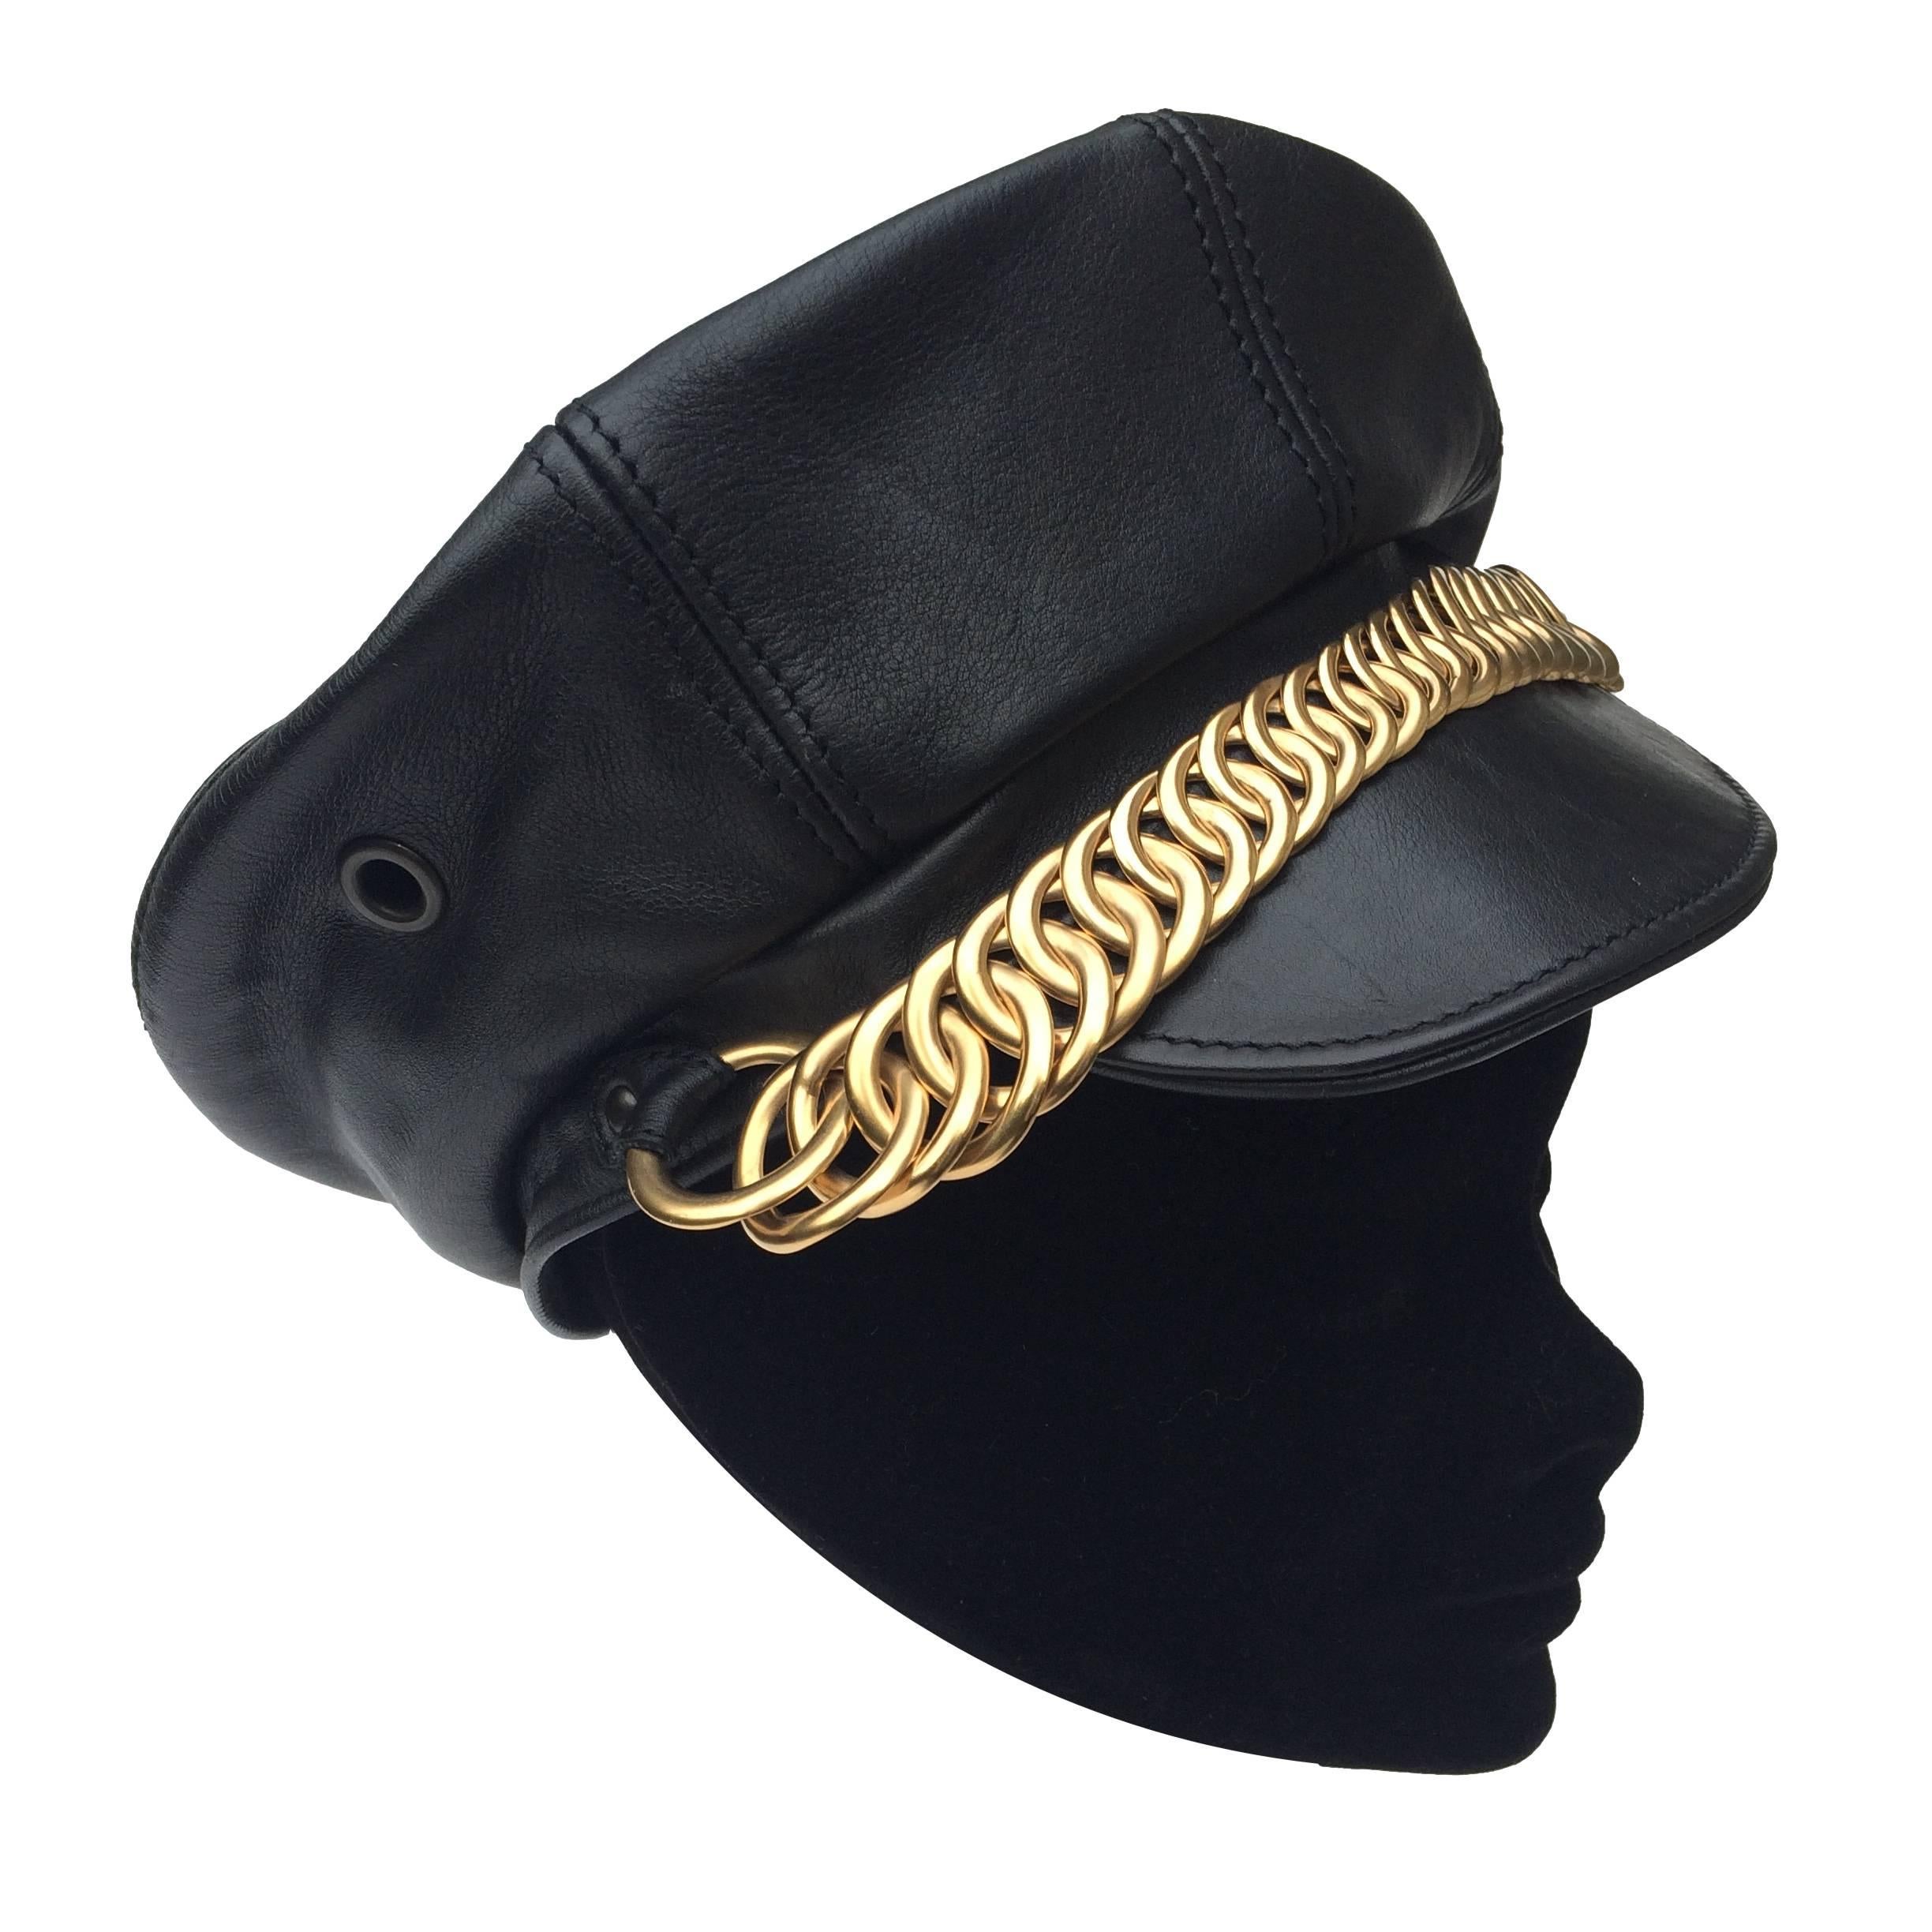  Balenciaga Black Leather and gilt metal peaked cap